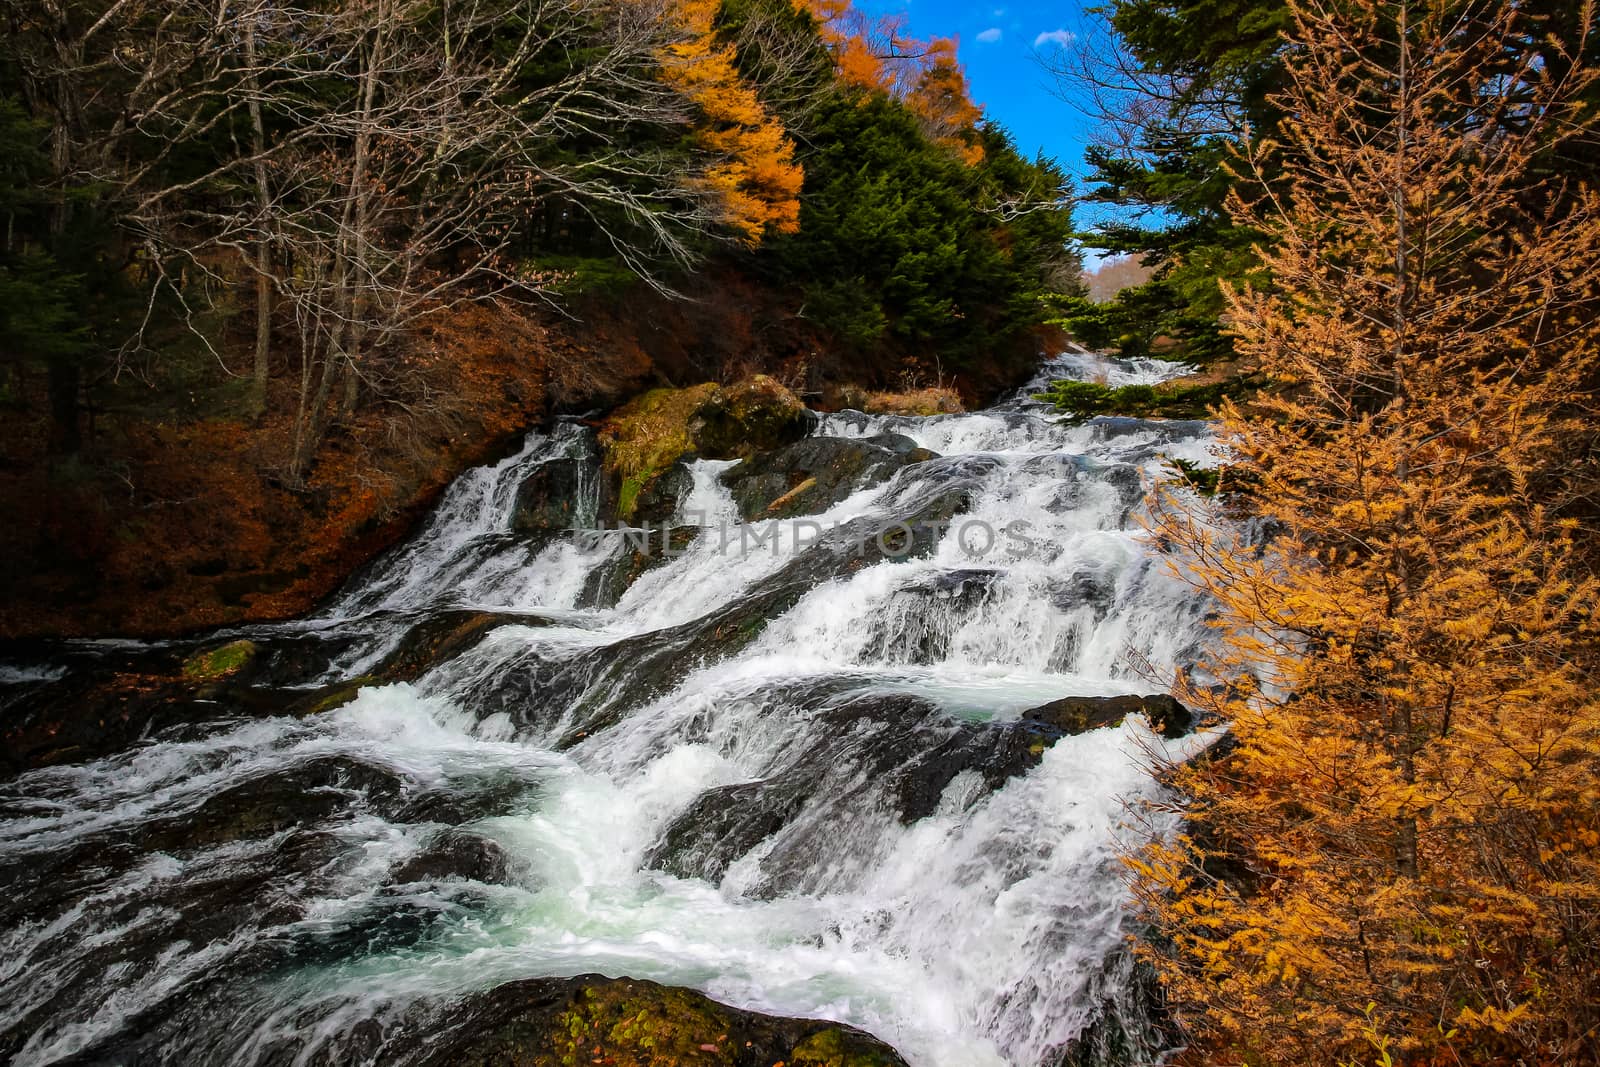 Ryuzu waterfall (Ryuzu no taki )or dragon head waterfall, water fall located on Yukawa River in Nikko national park, many autumn trees which turn yellow and red during the autumn leaf season in Japan